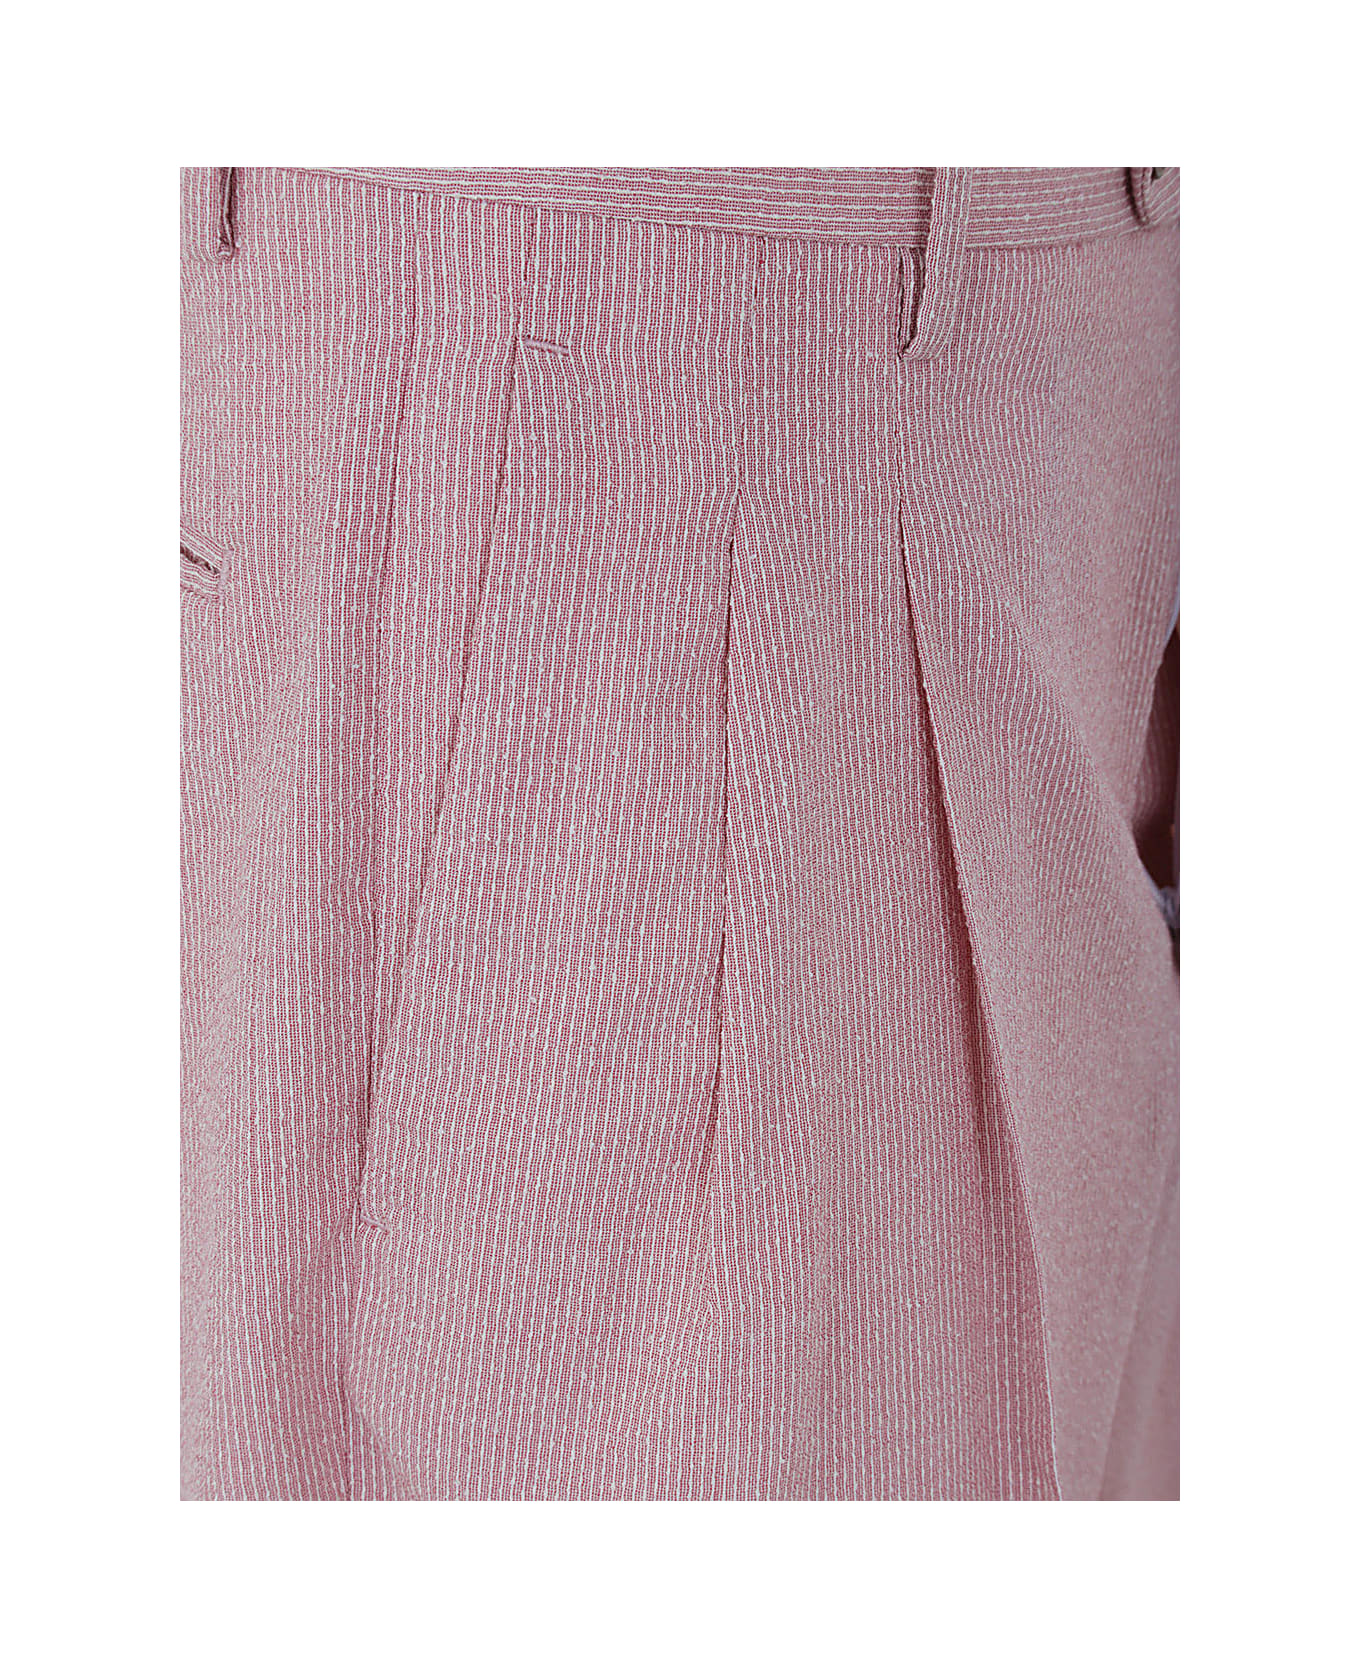 Lardini Shorts - Pink